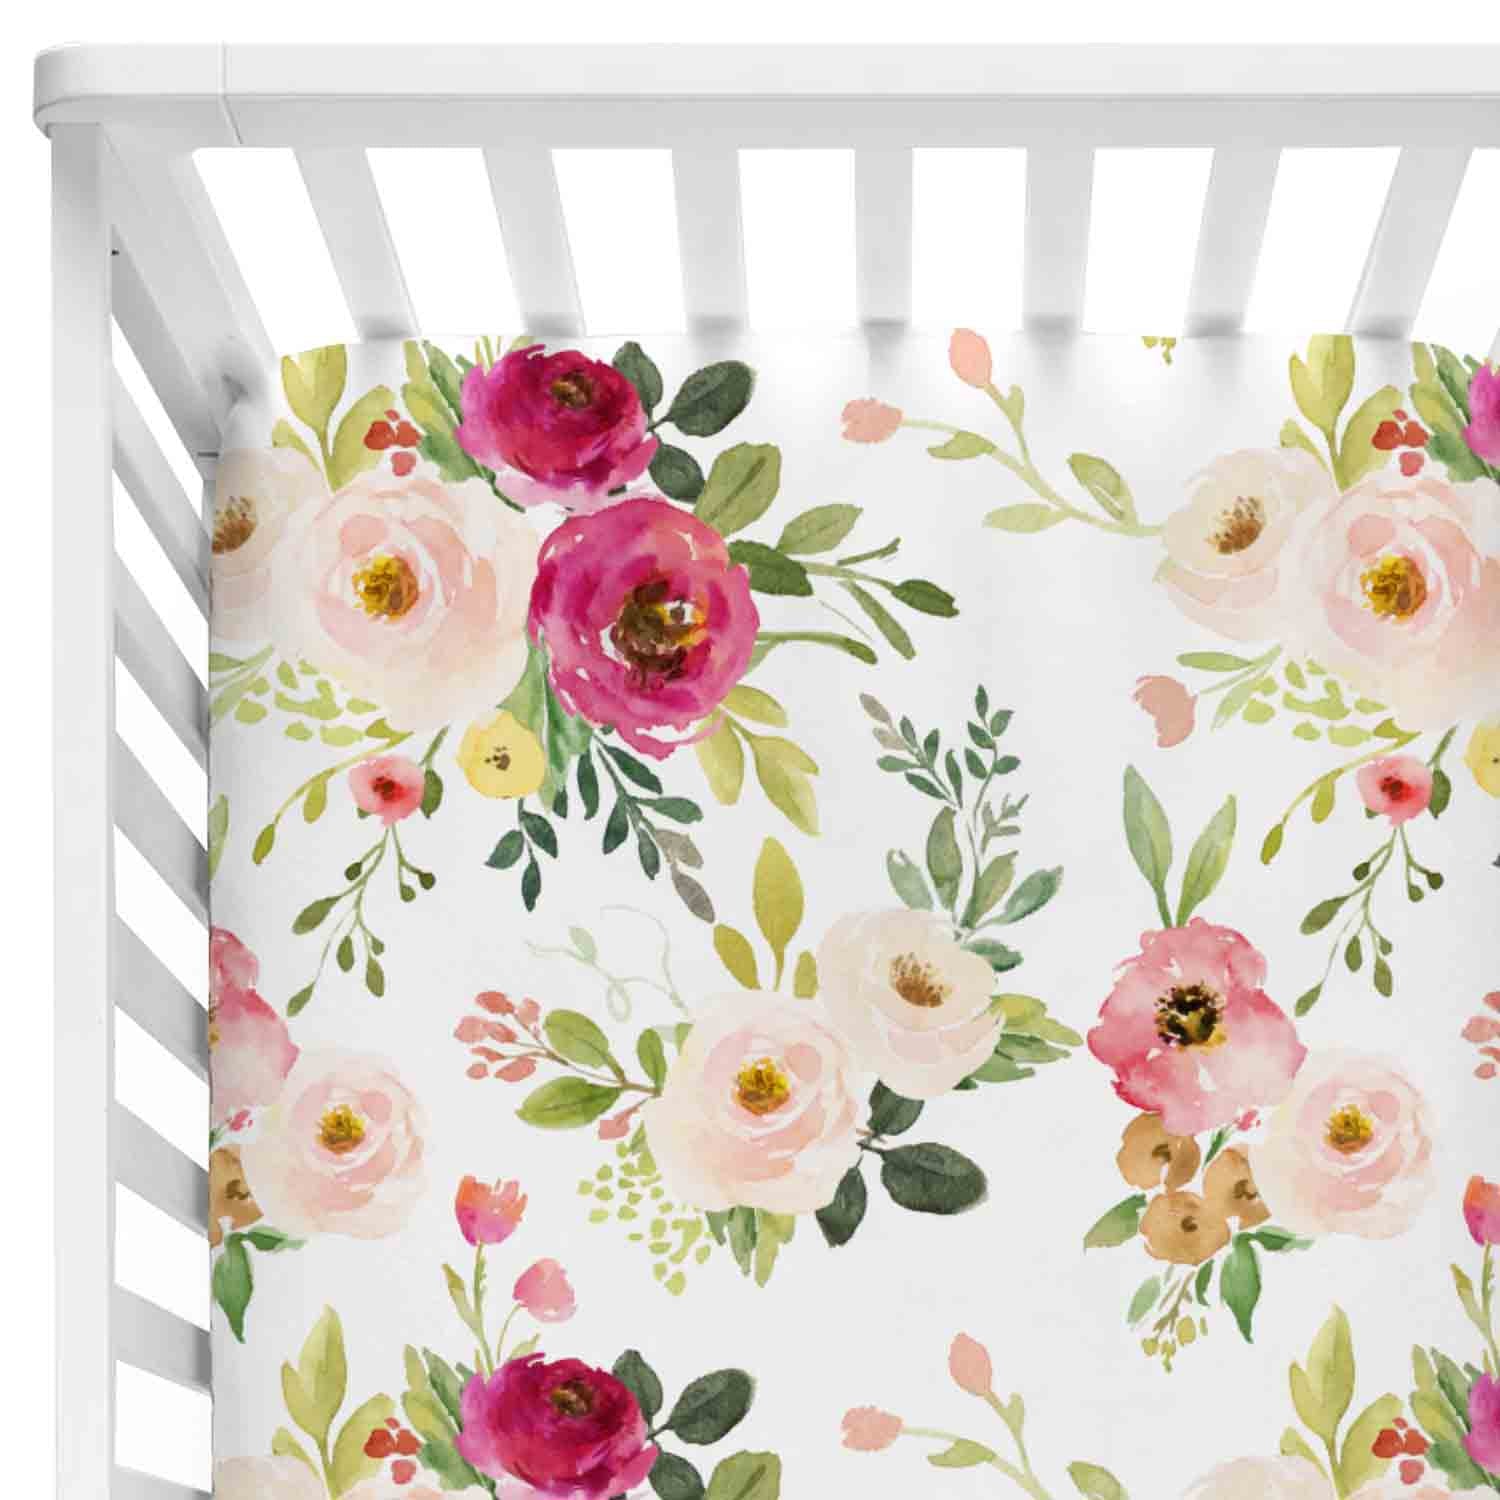 floral crib sheets canada